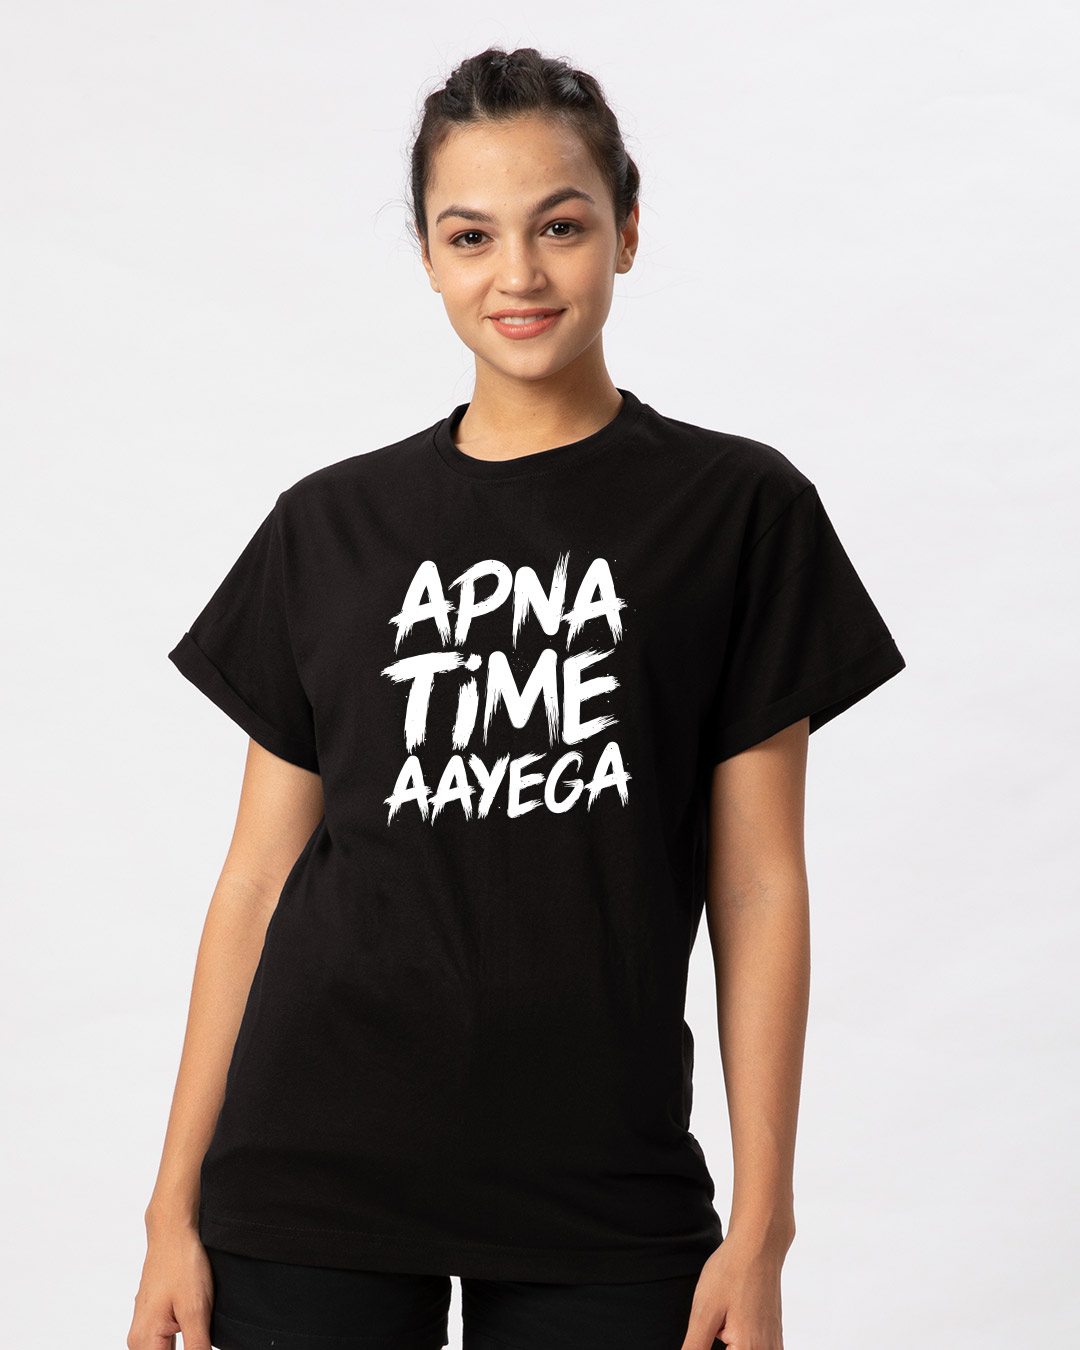 apna time aayega t shirt online shopping